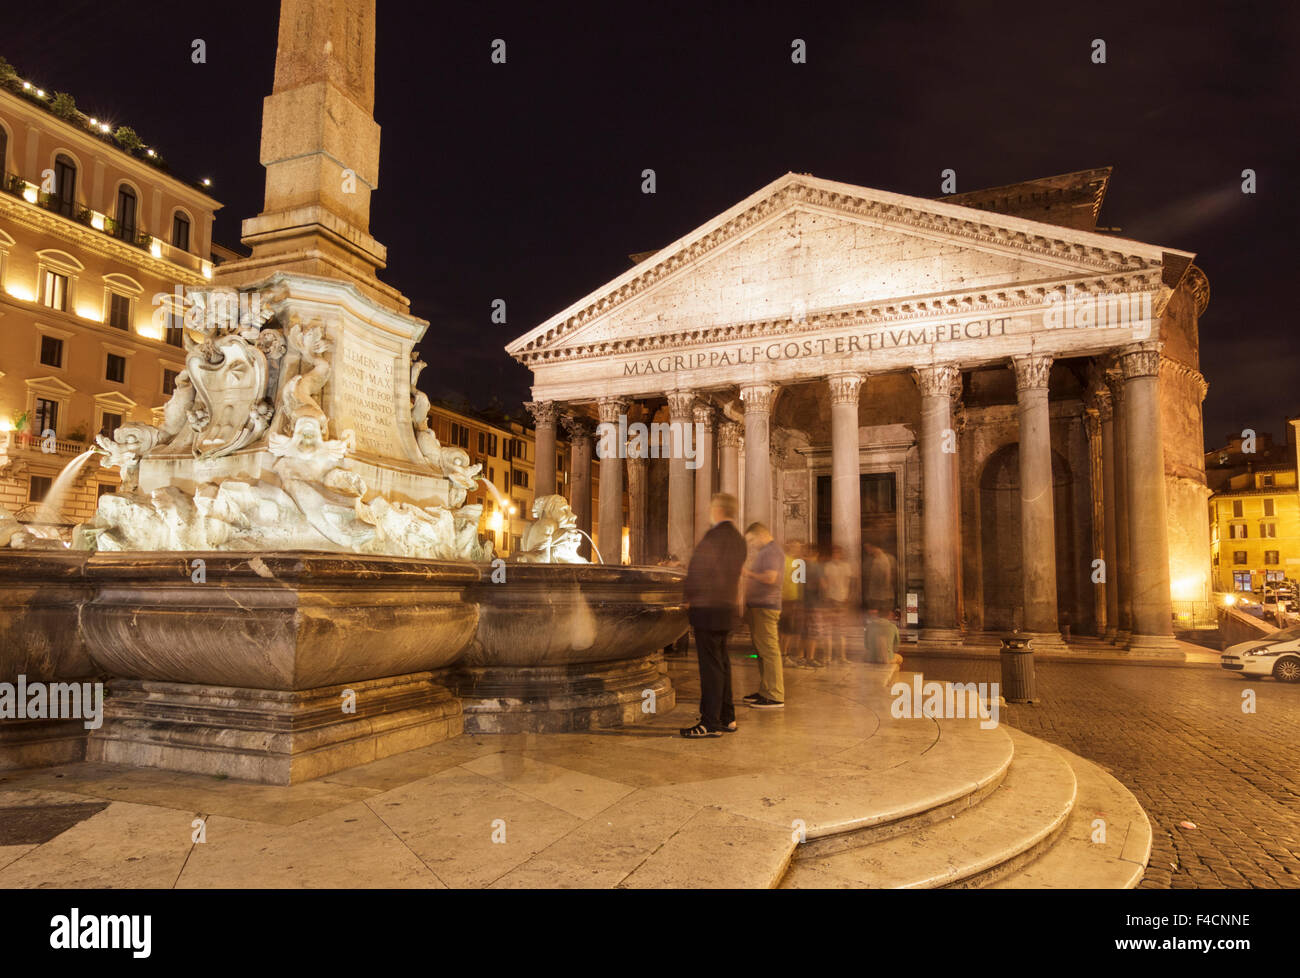 Pantheon on Piazza della Rotonda, Rome, Italy Stock Photo